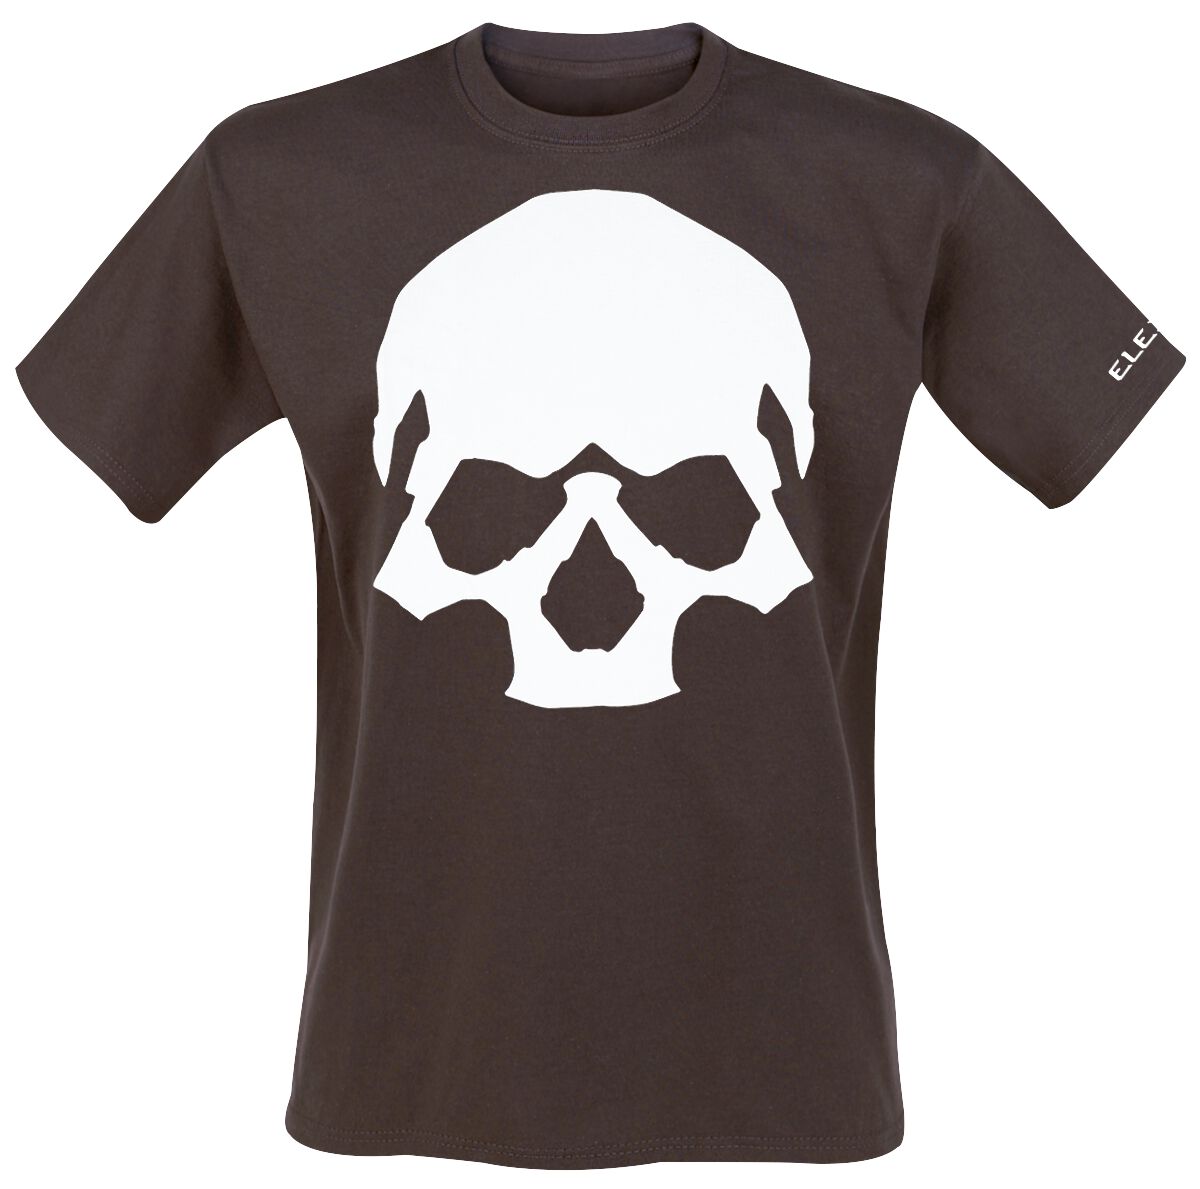 Elex 2 Outlaws T-Shirt dark brown